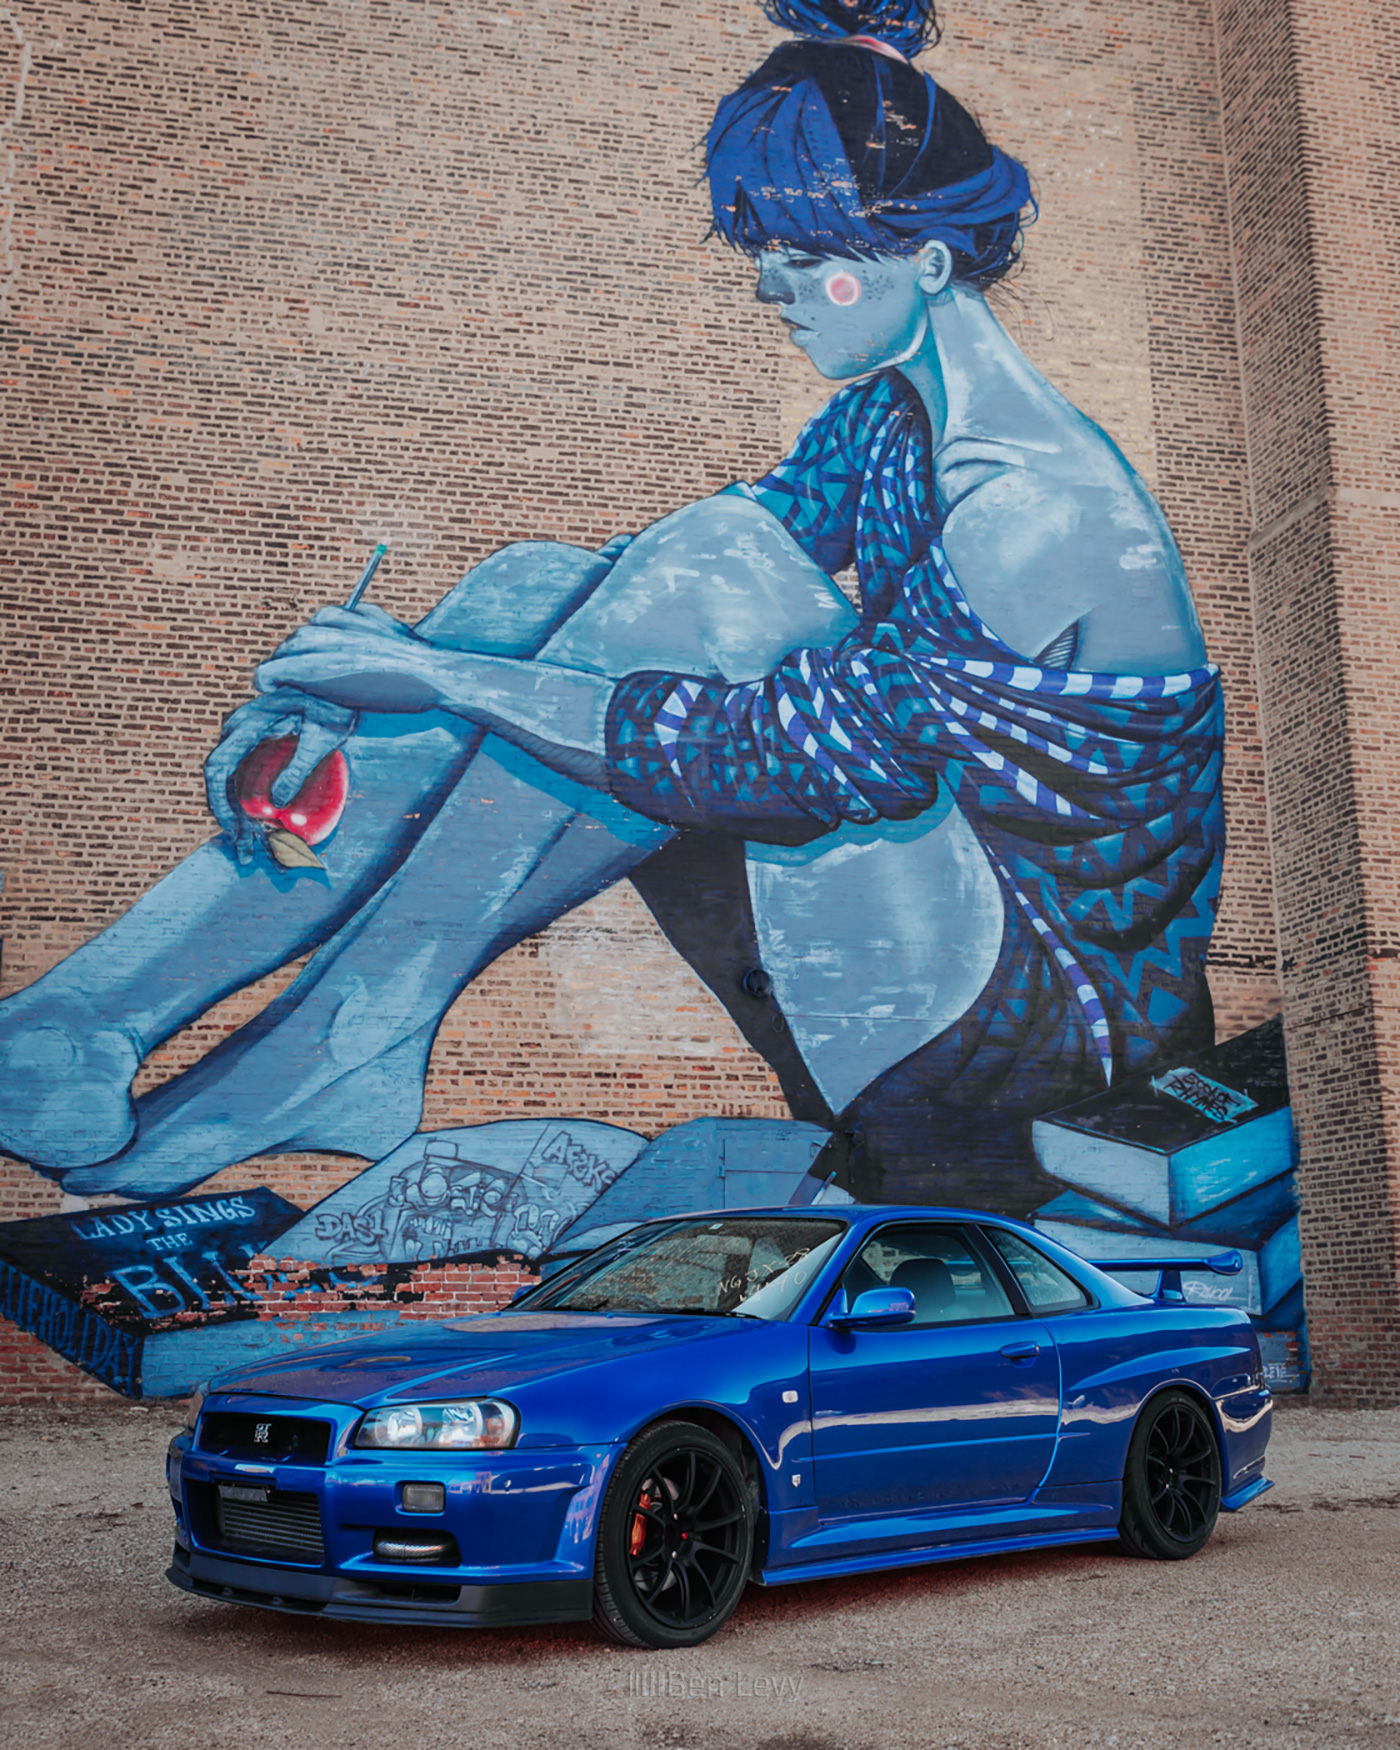 Blue R34 Nissan Skyline in front of Mural in Pilsen, Chicago